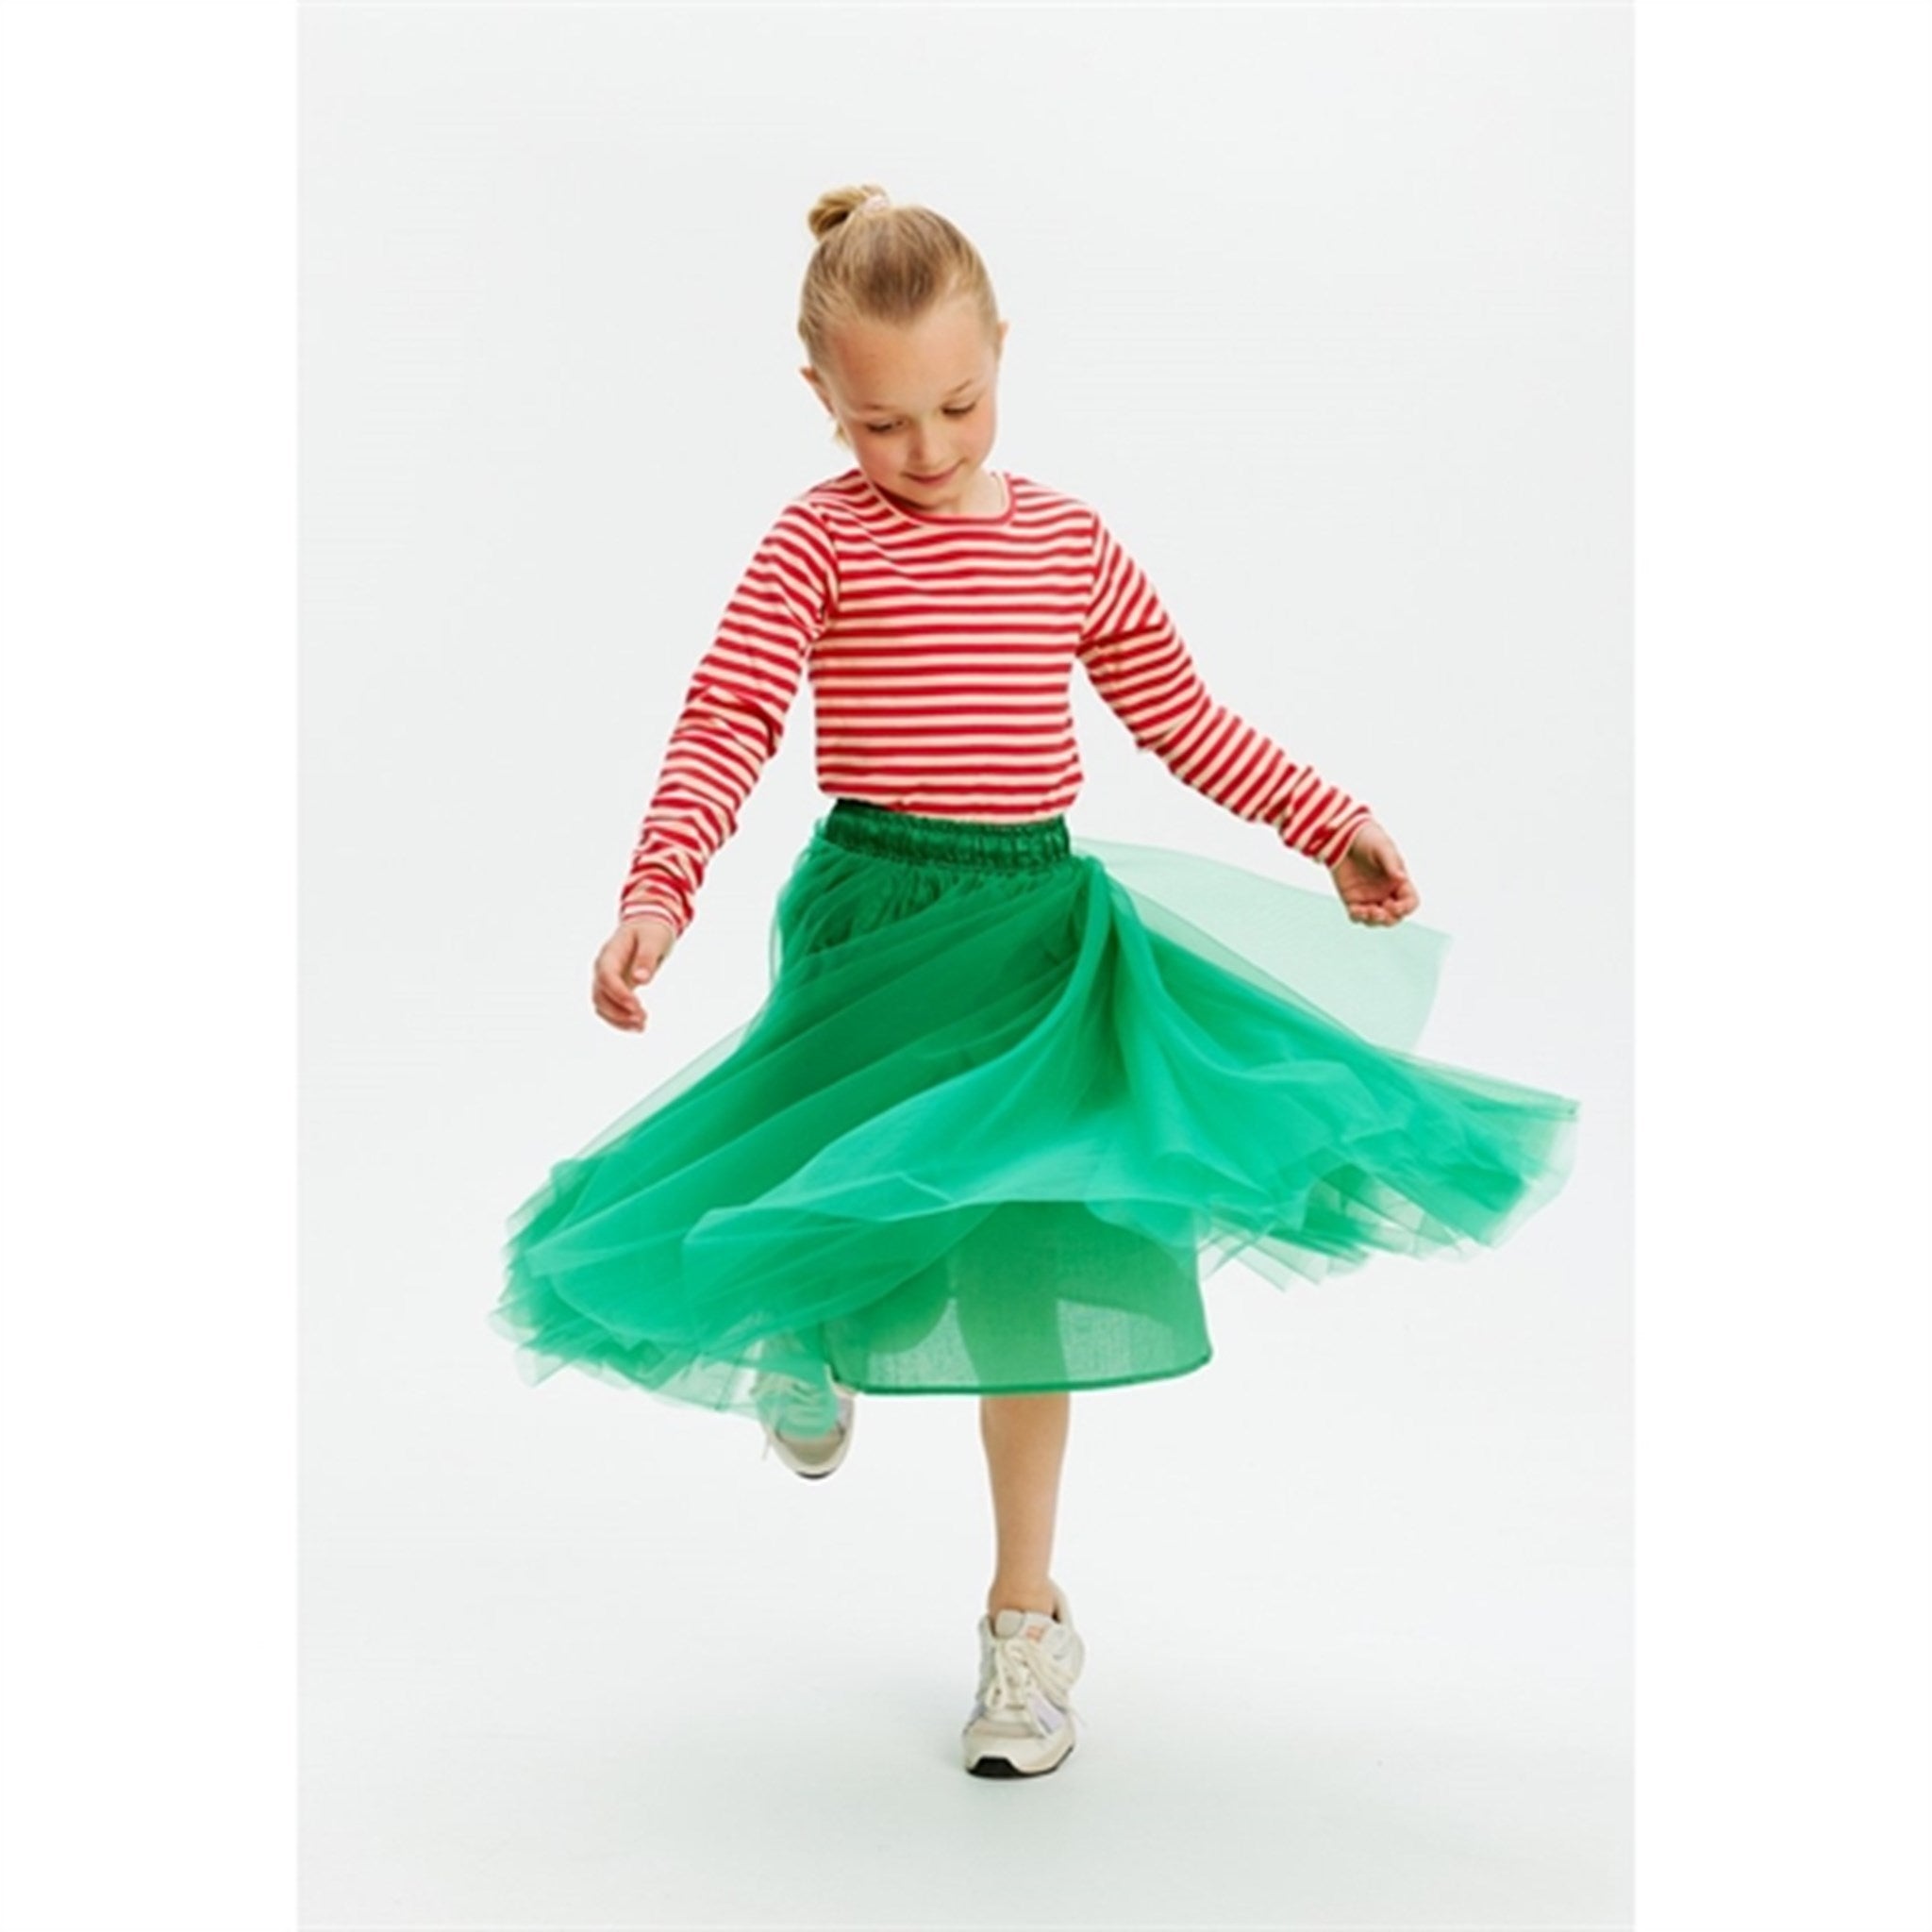 The New Bright Green Heaven Skirt 3